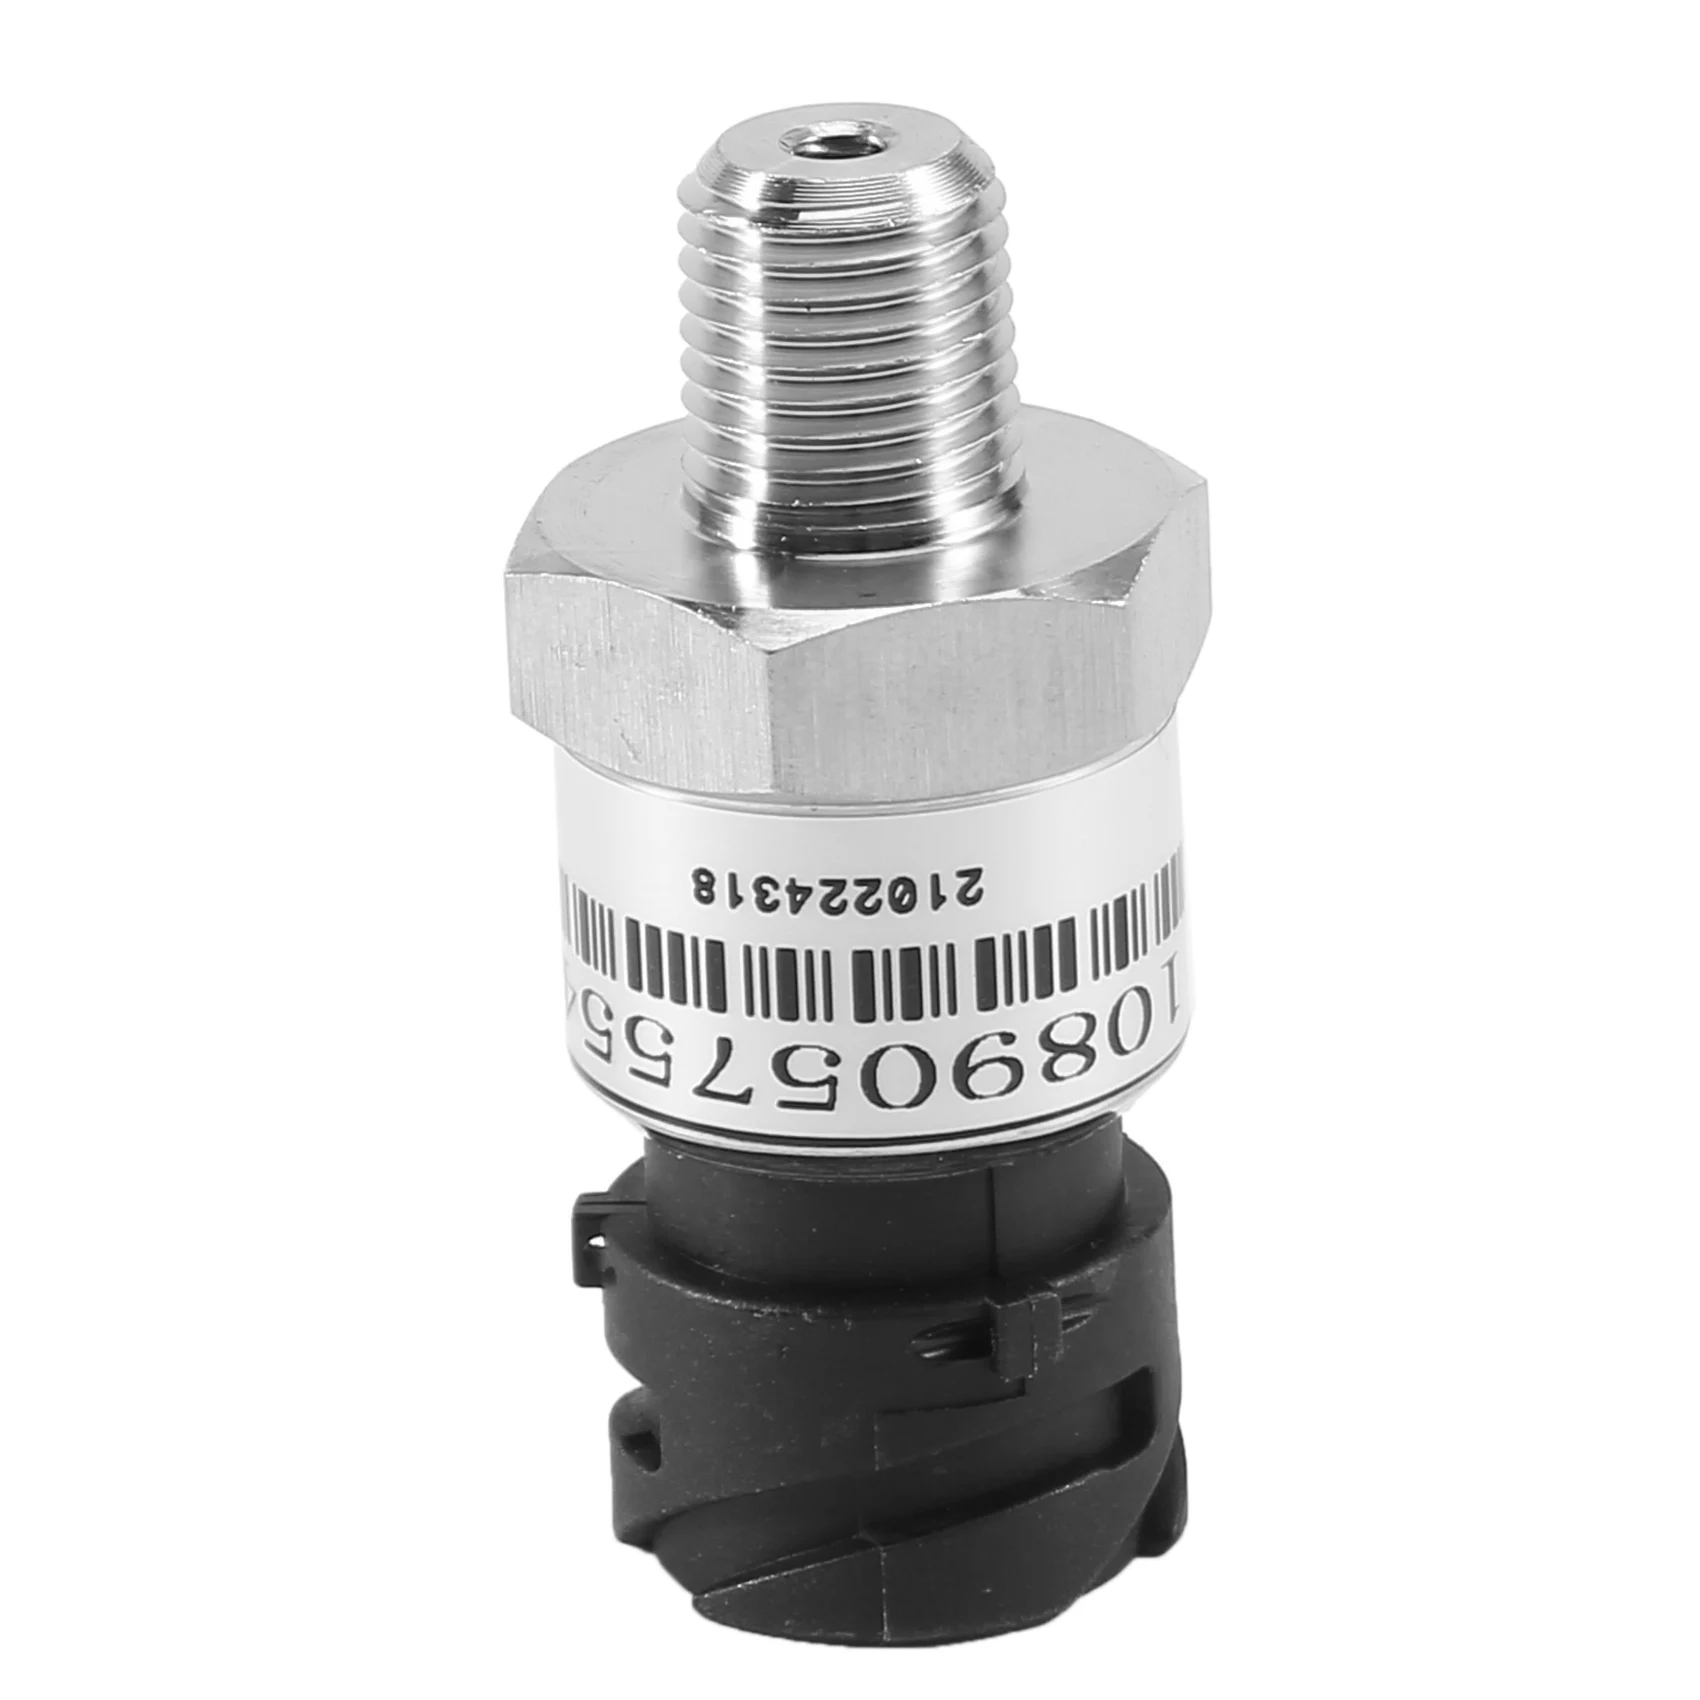 

Part Number 1089057554 Pressure Sensor Replacement Parts for AC Air Compressor Parts